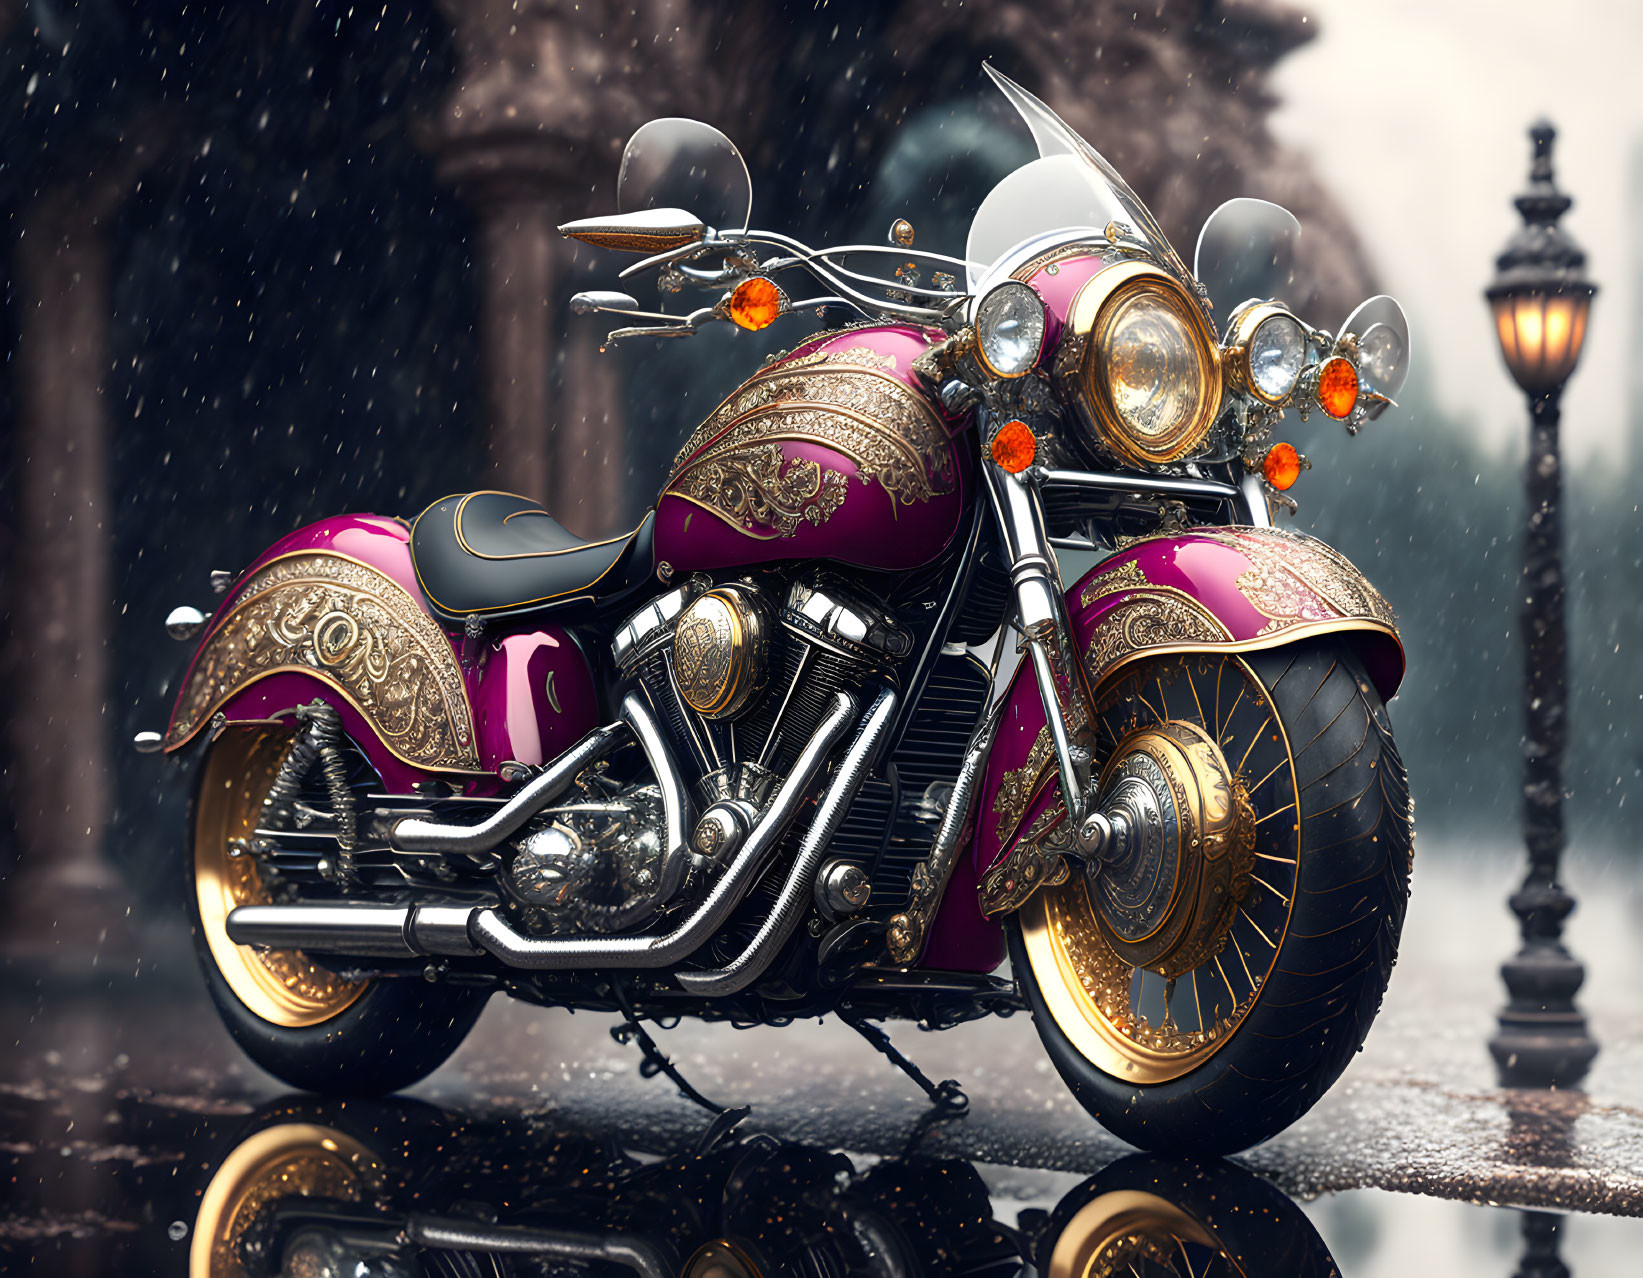 Ornate motorcycle